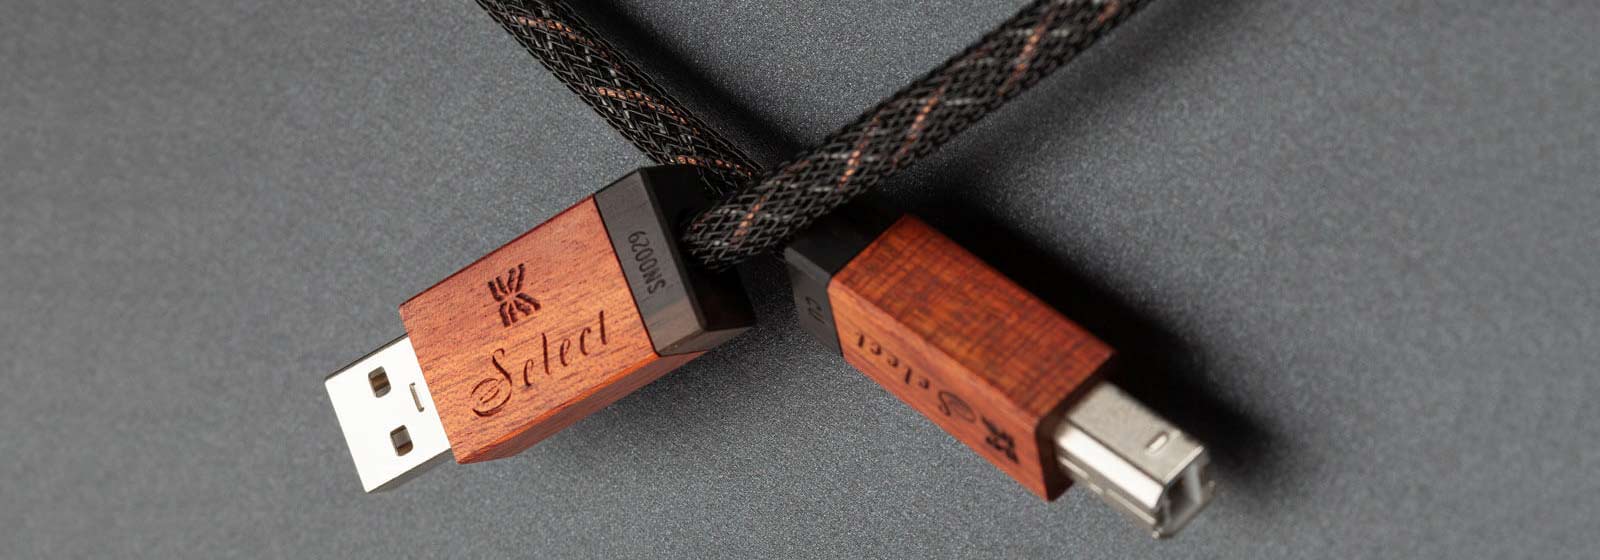 Kimber-USB-Copper-interconnect